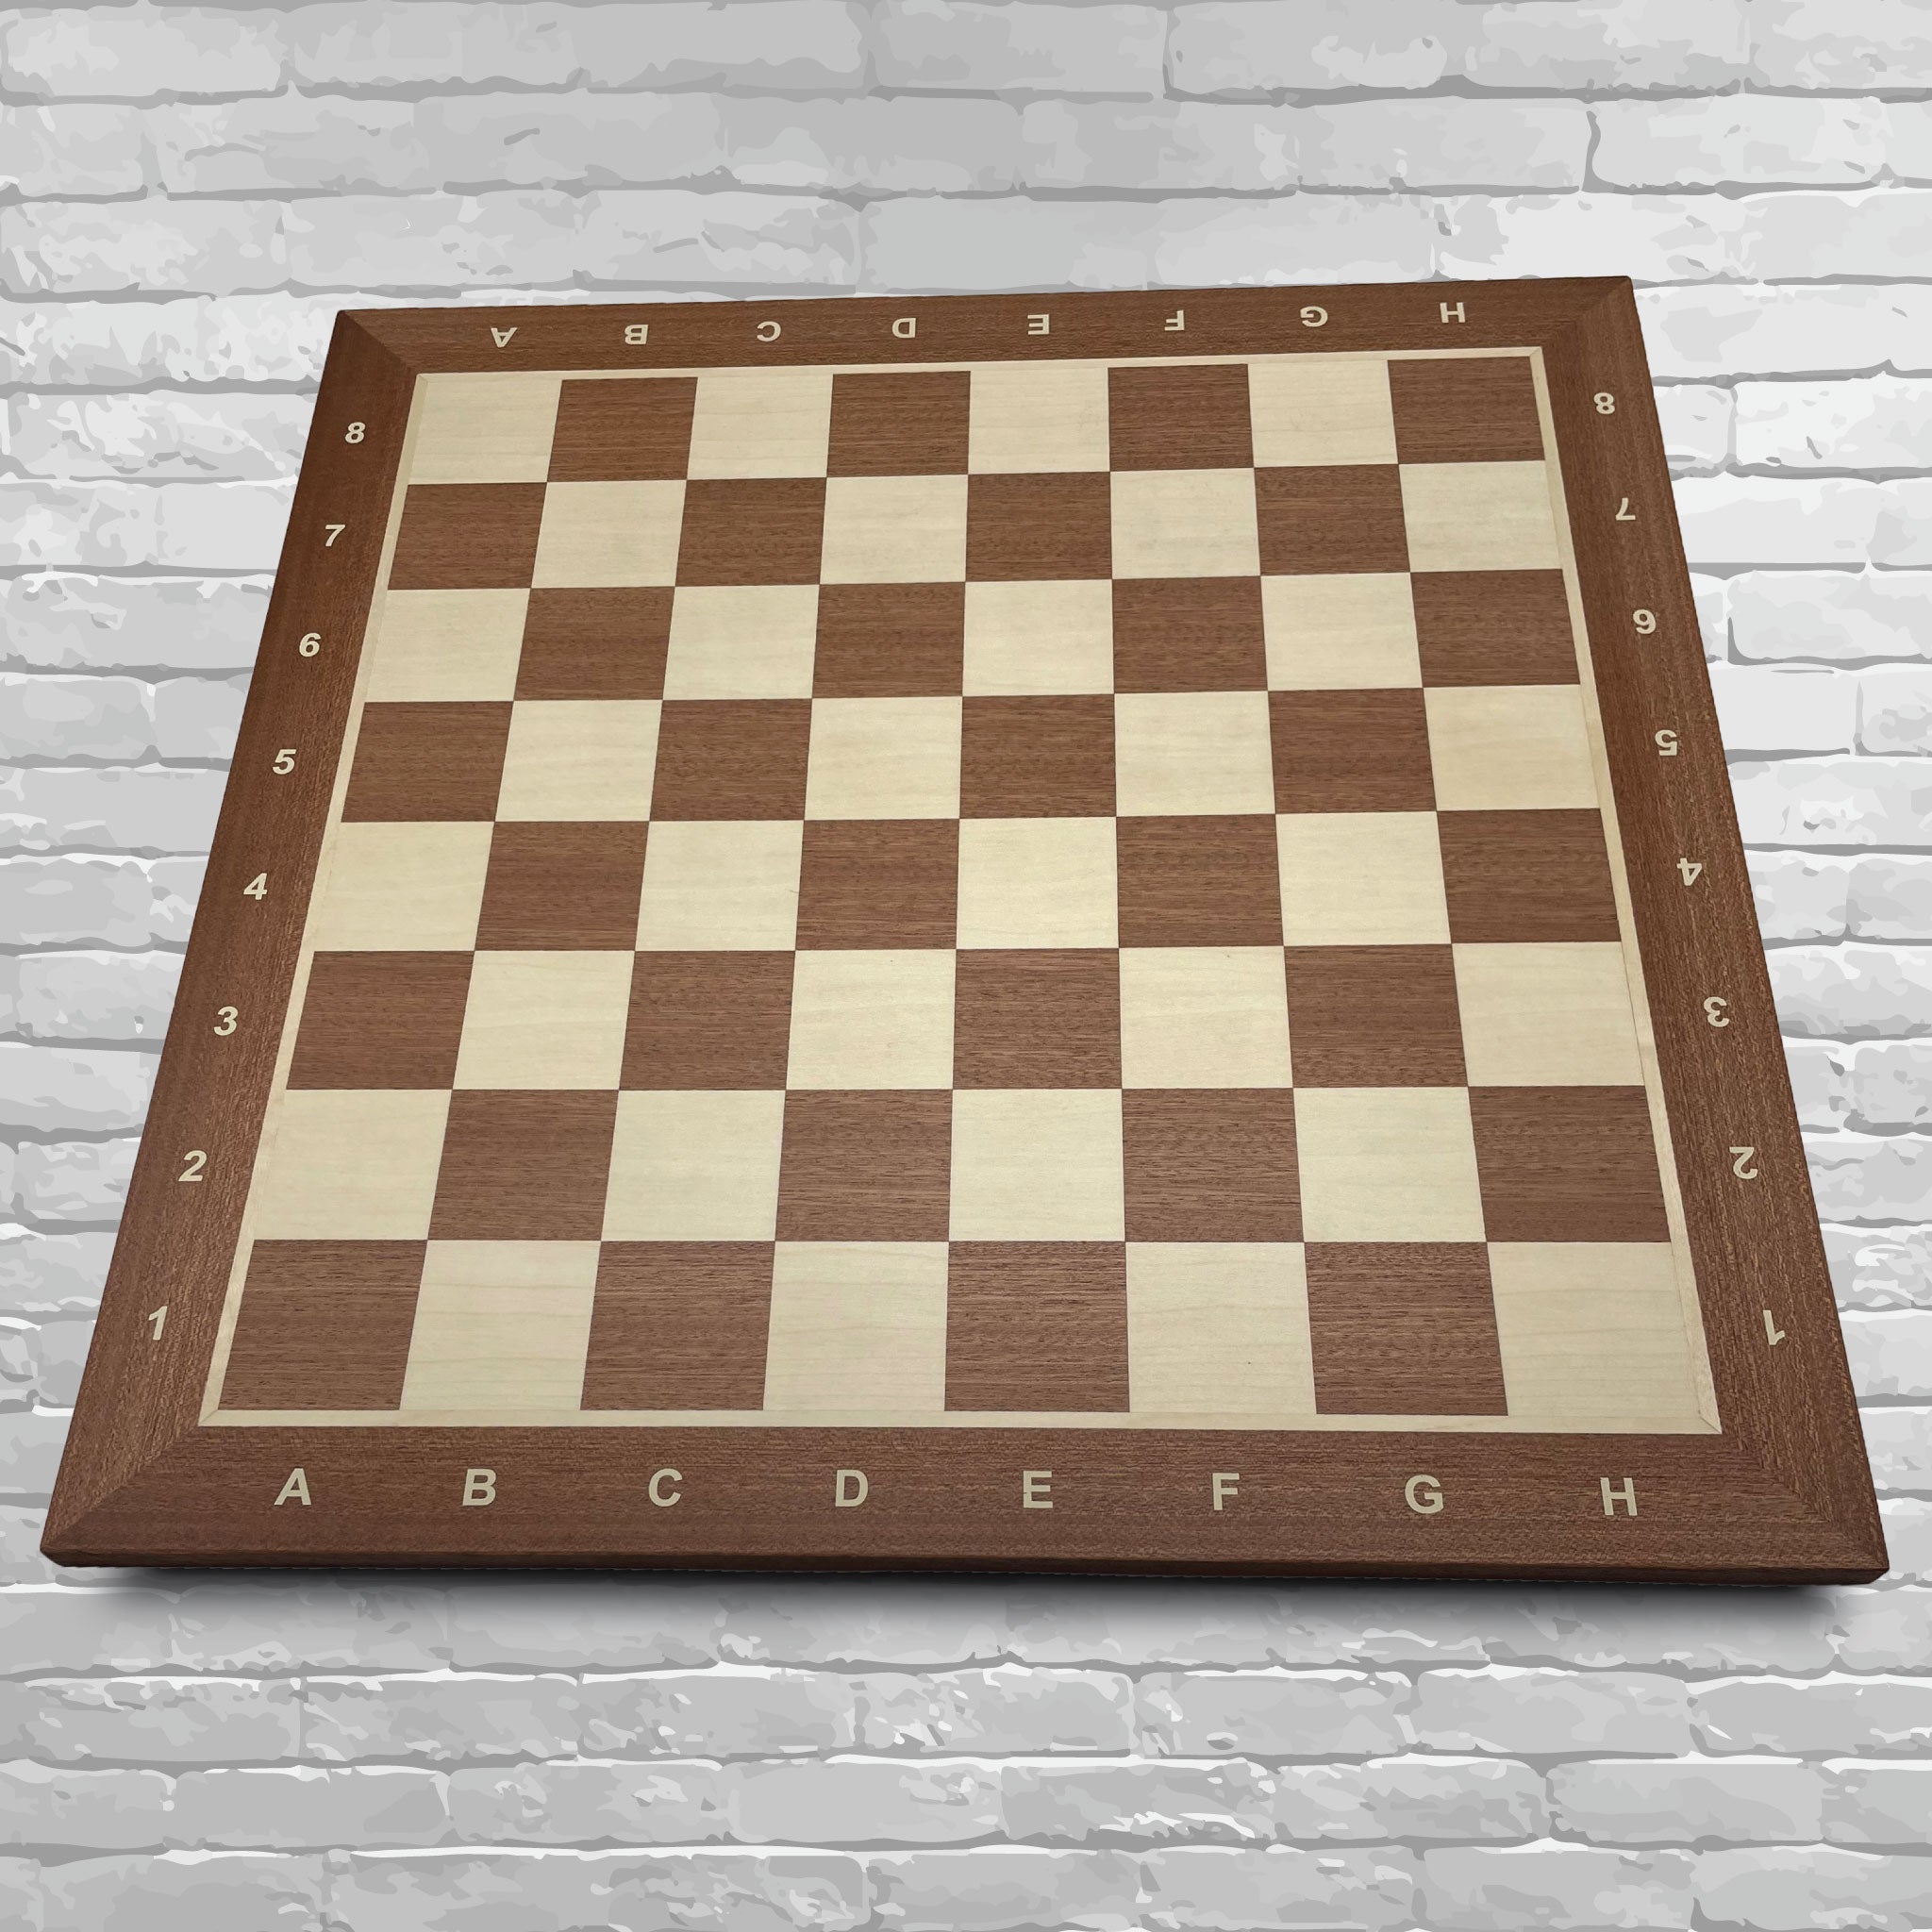 Staunton 3D Printed Chess Set